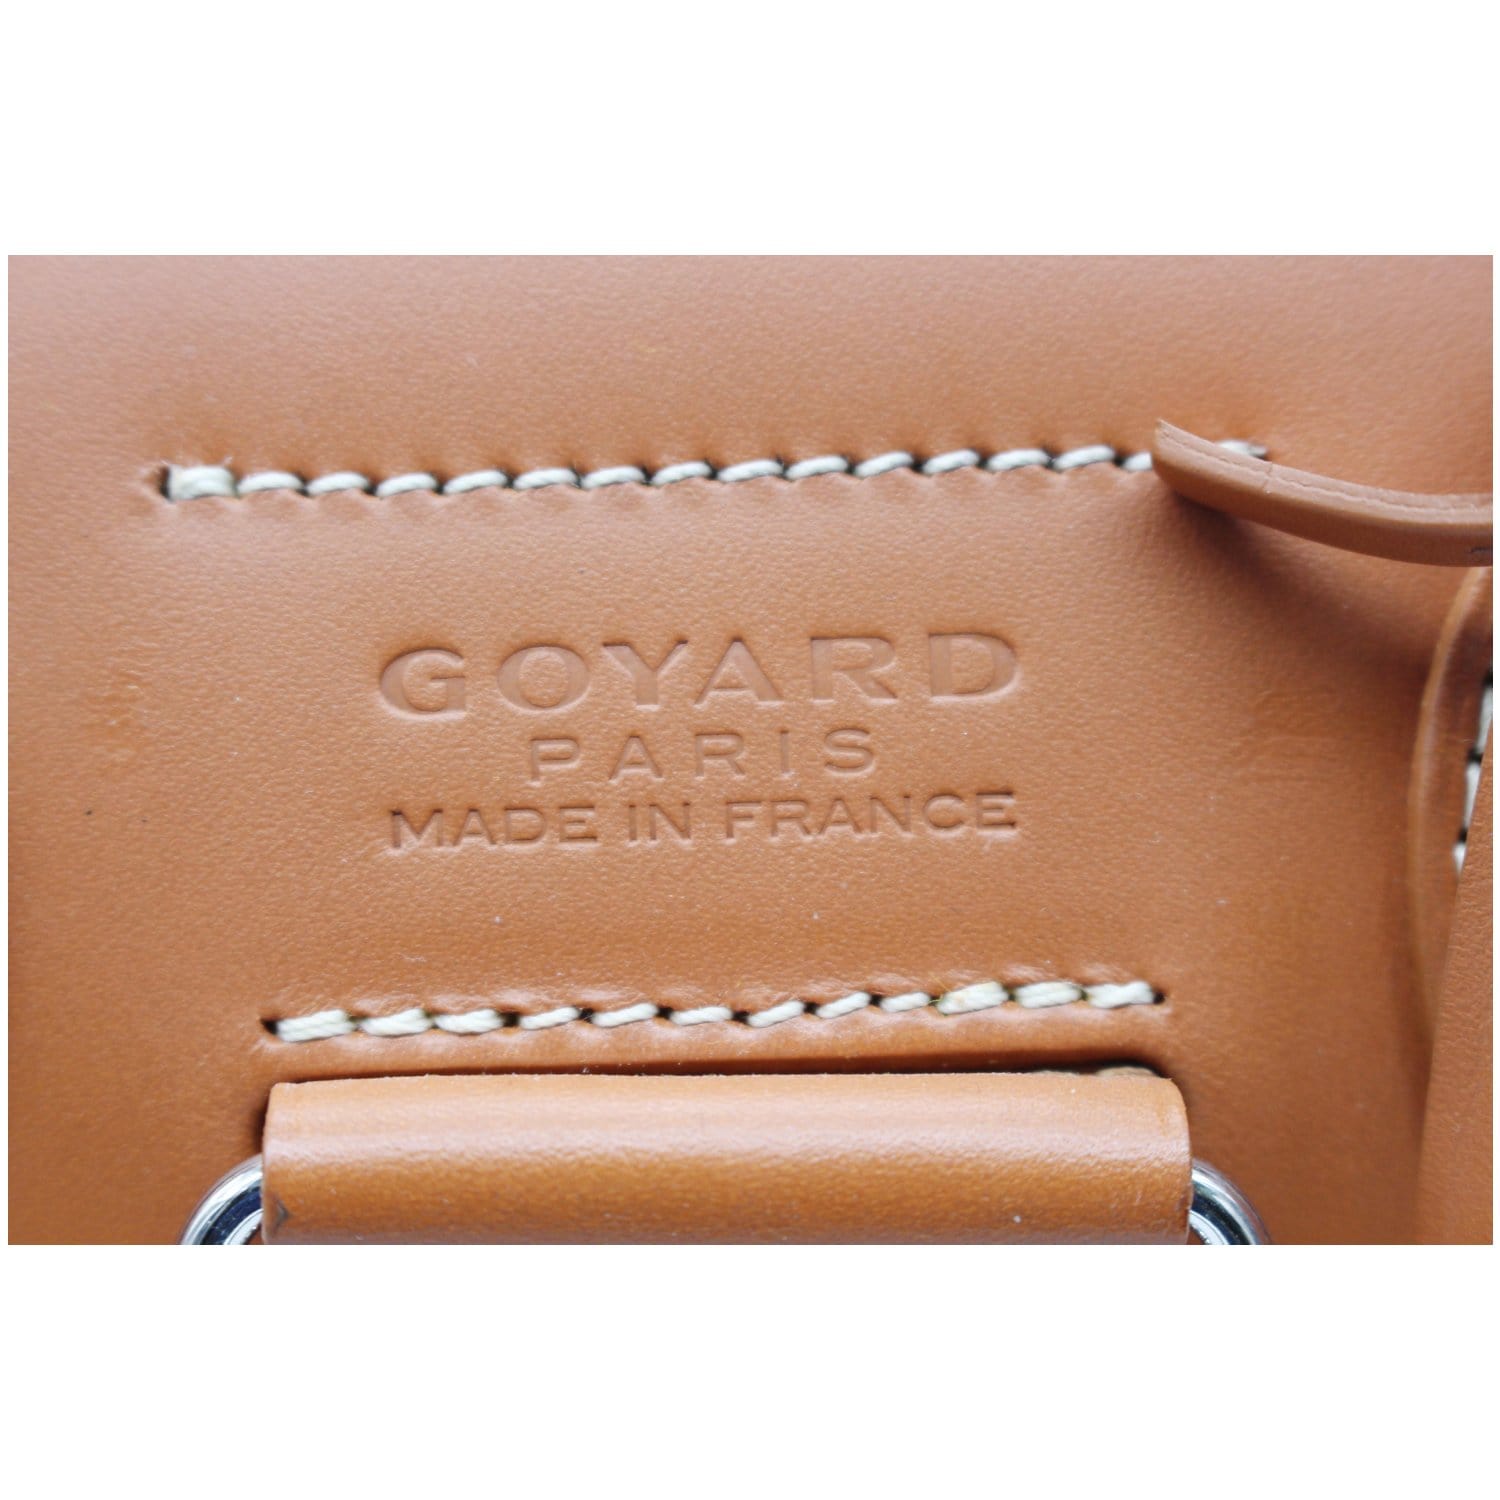 Goyard Alpin Backpack Goyardine Black/Tan in Goyardine/Calfskin Leather  with Silver-tone - US